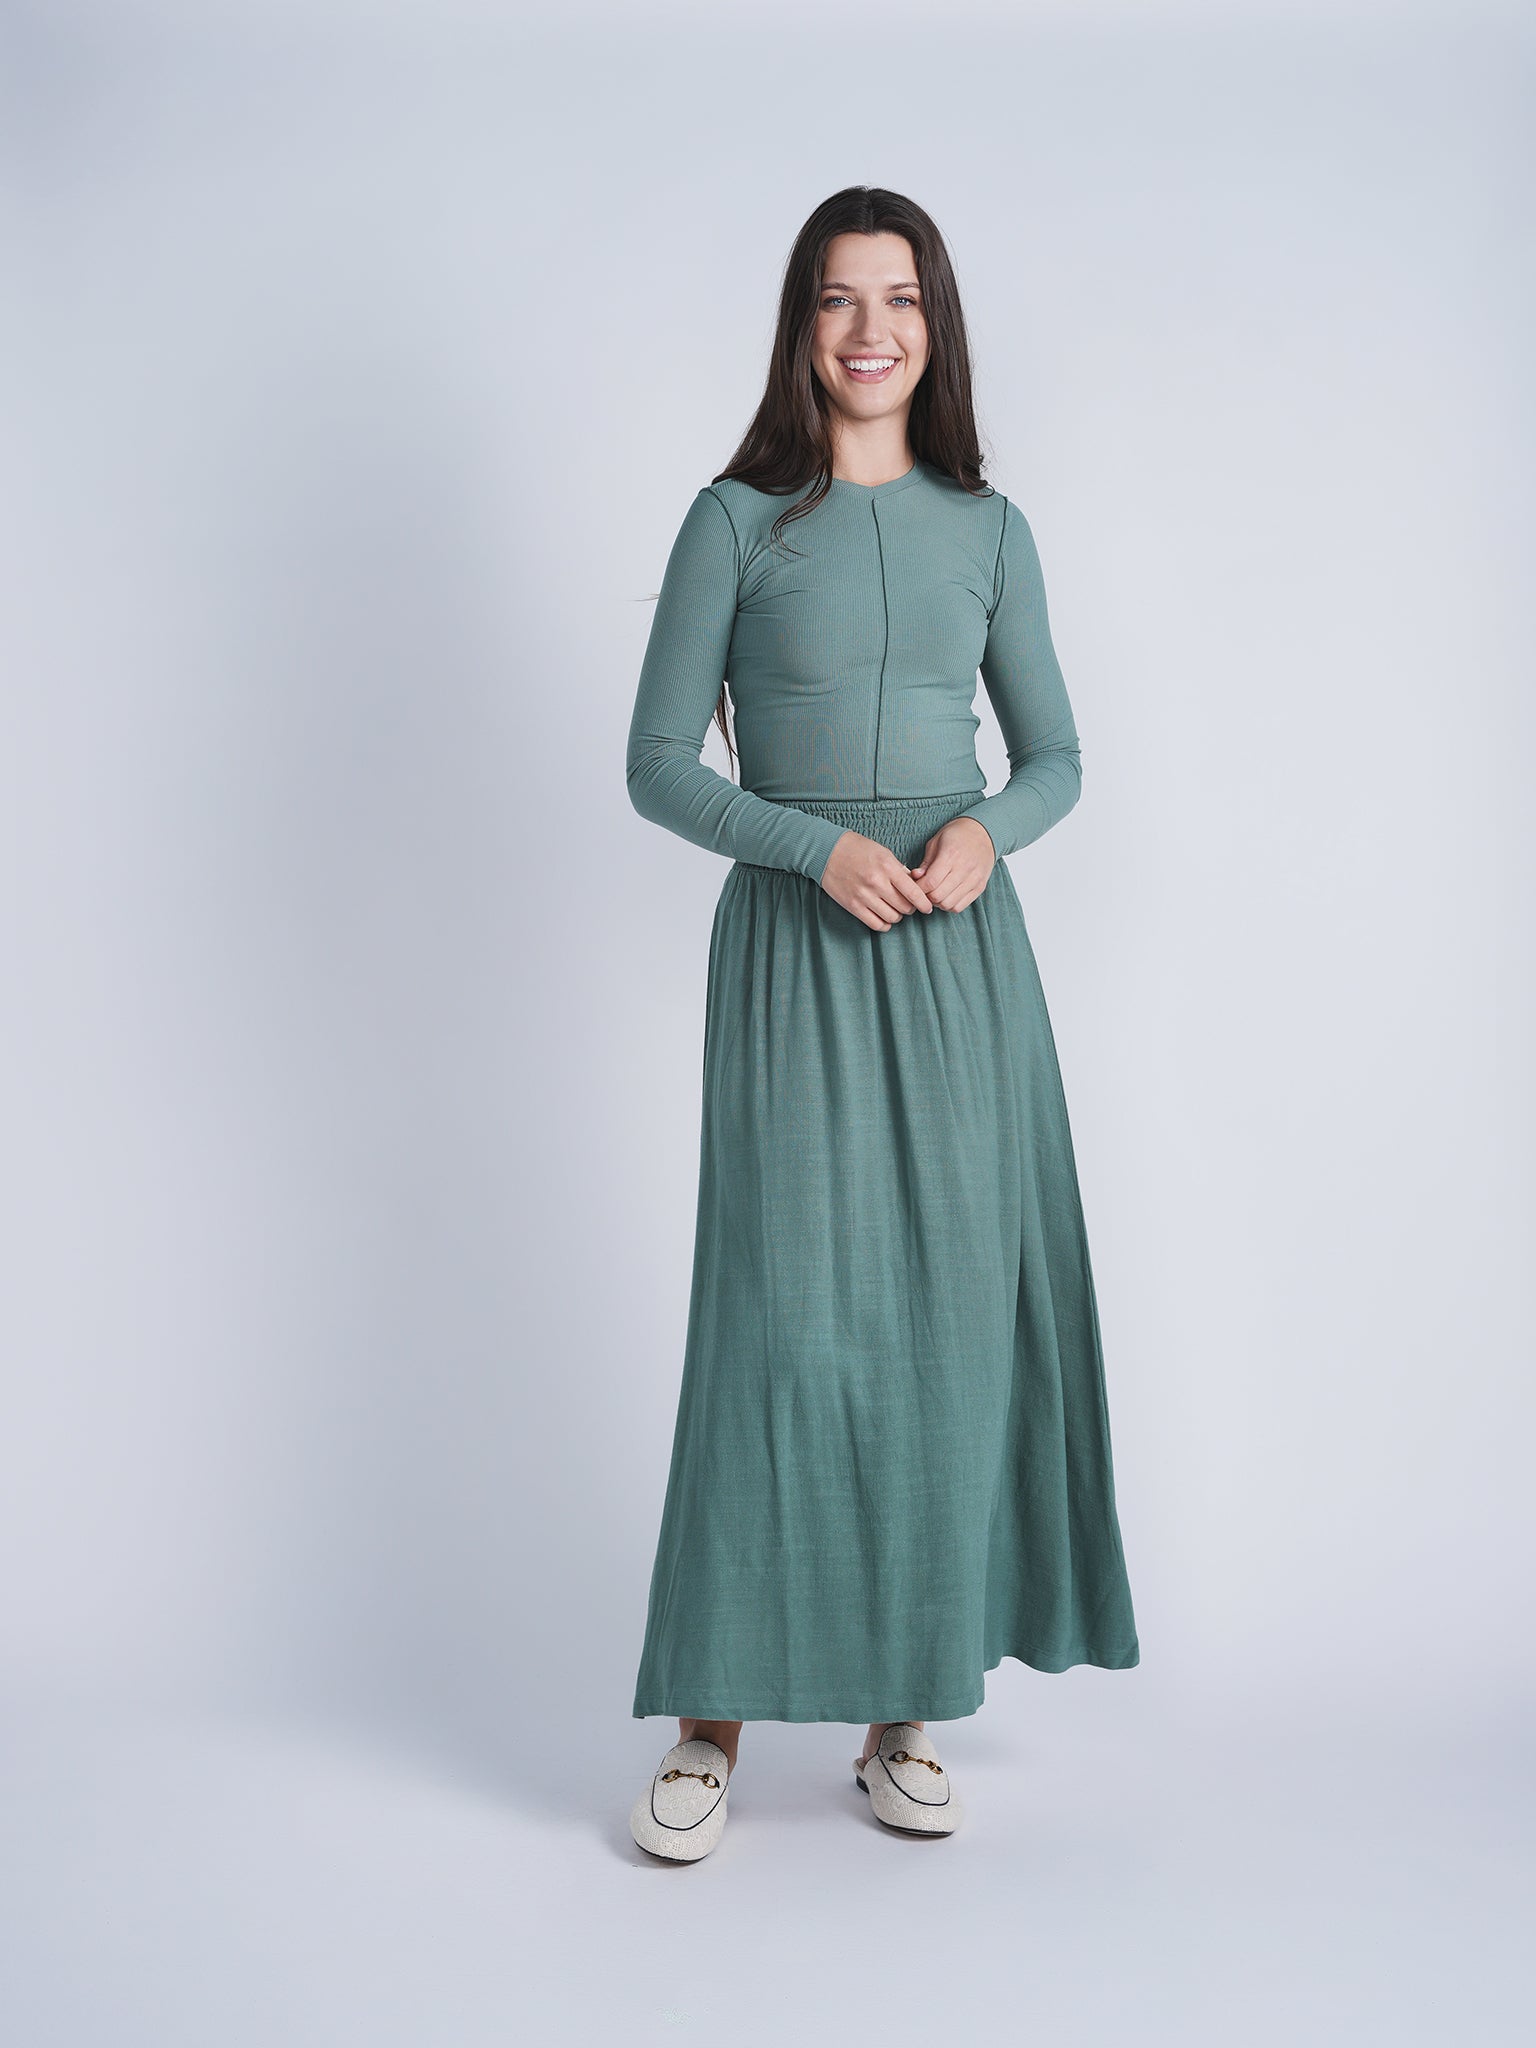 Fyi Sage Long Skirt